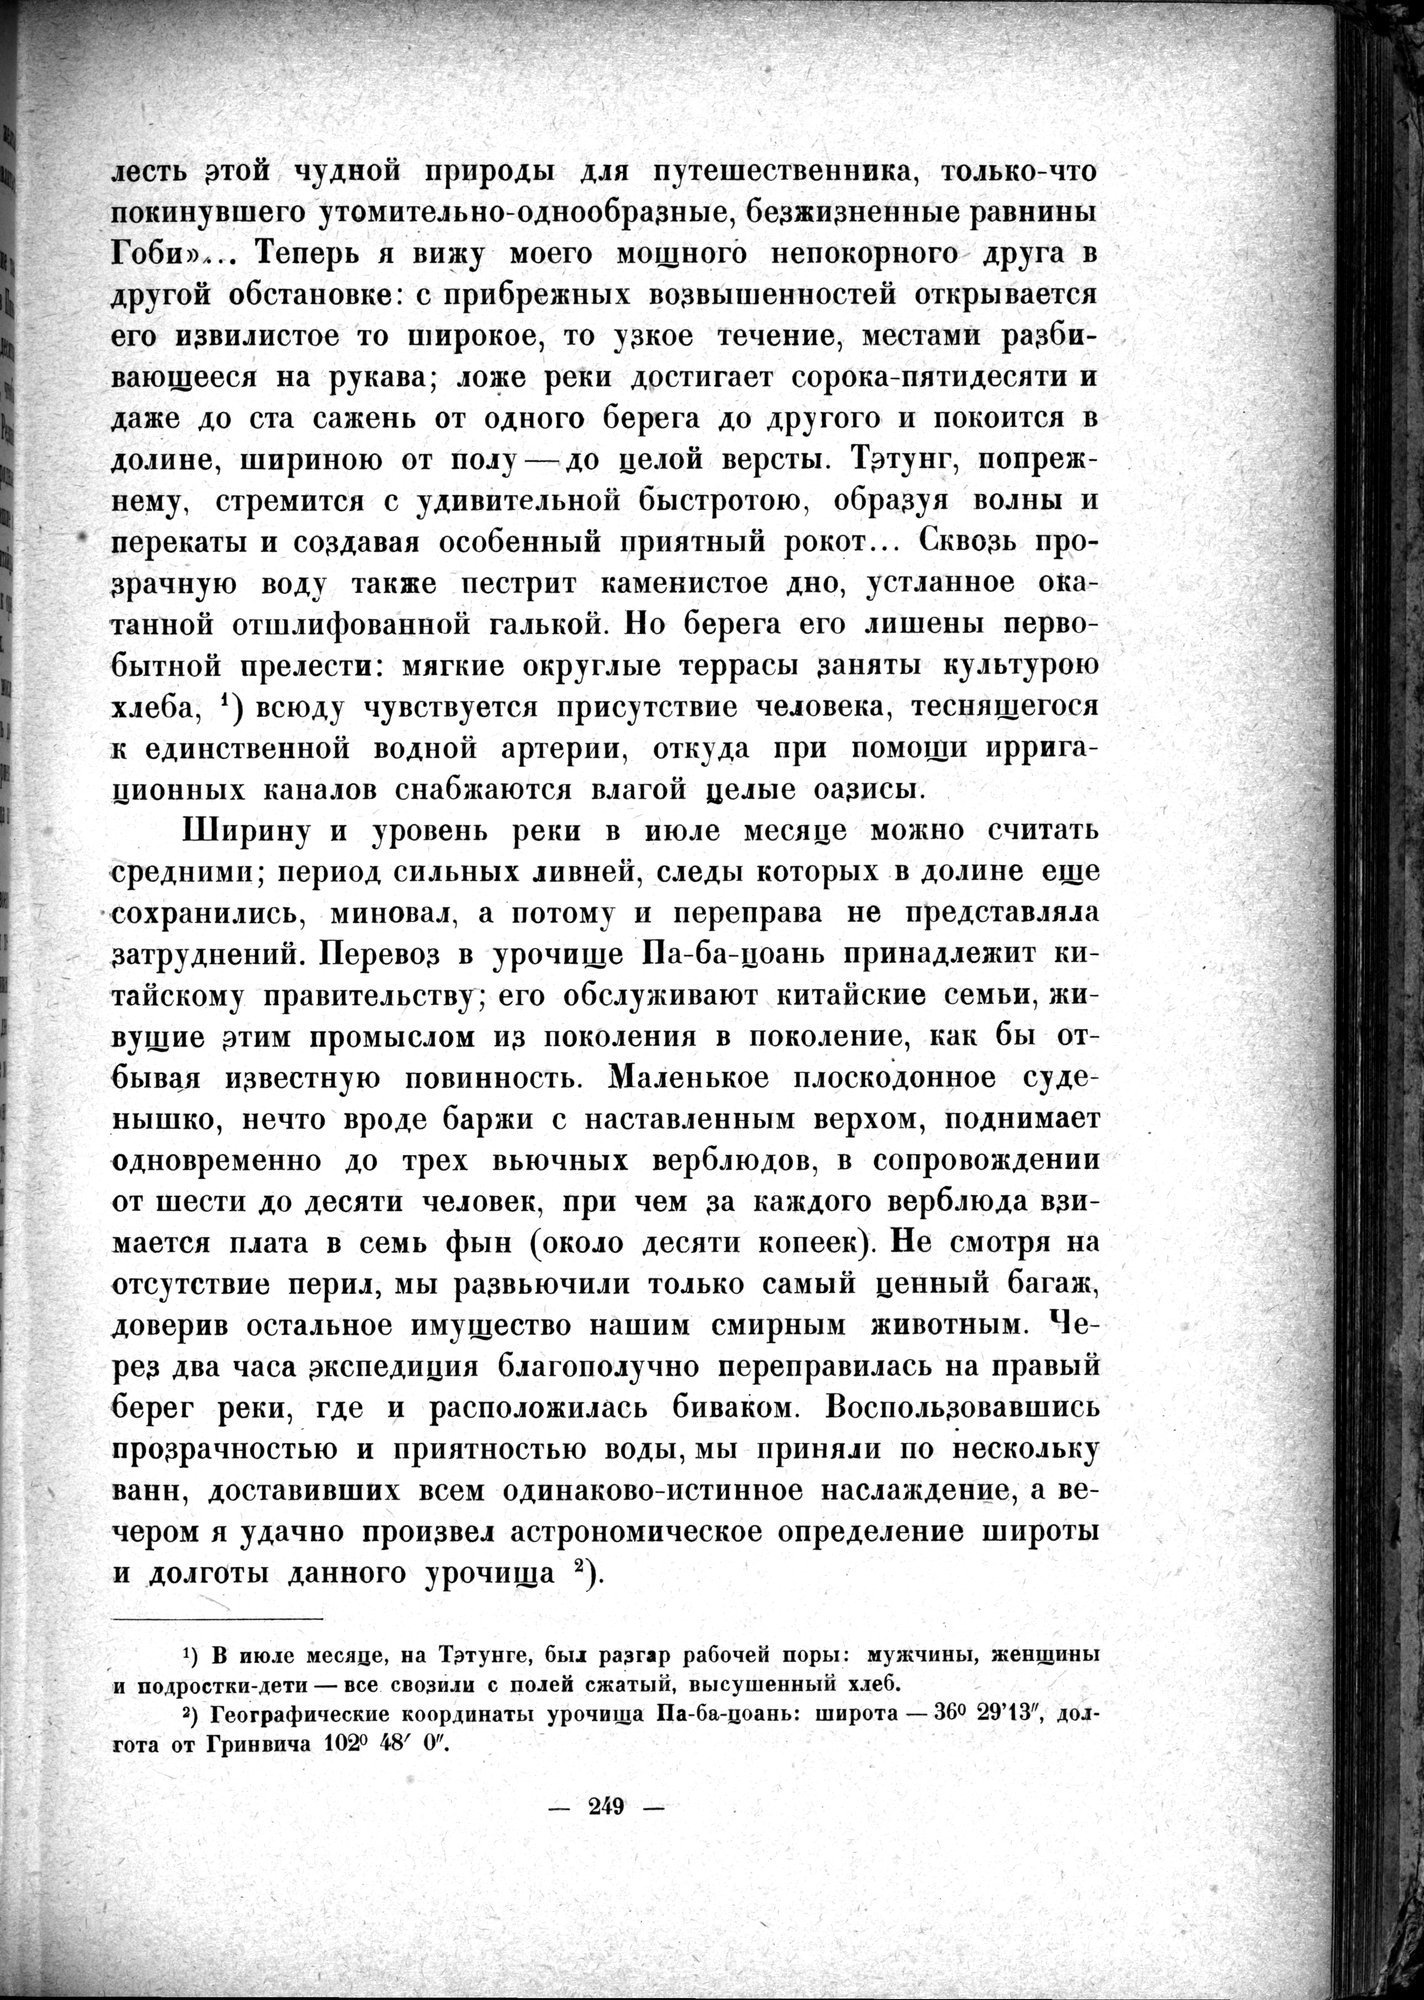 Mongoliya i Amdo i mertby gorod Khara-Khoto : vol.1 / Page 295 (Grayscale High Resolution Image)